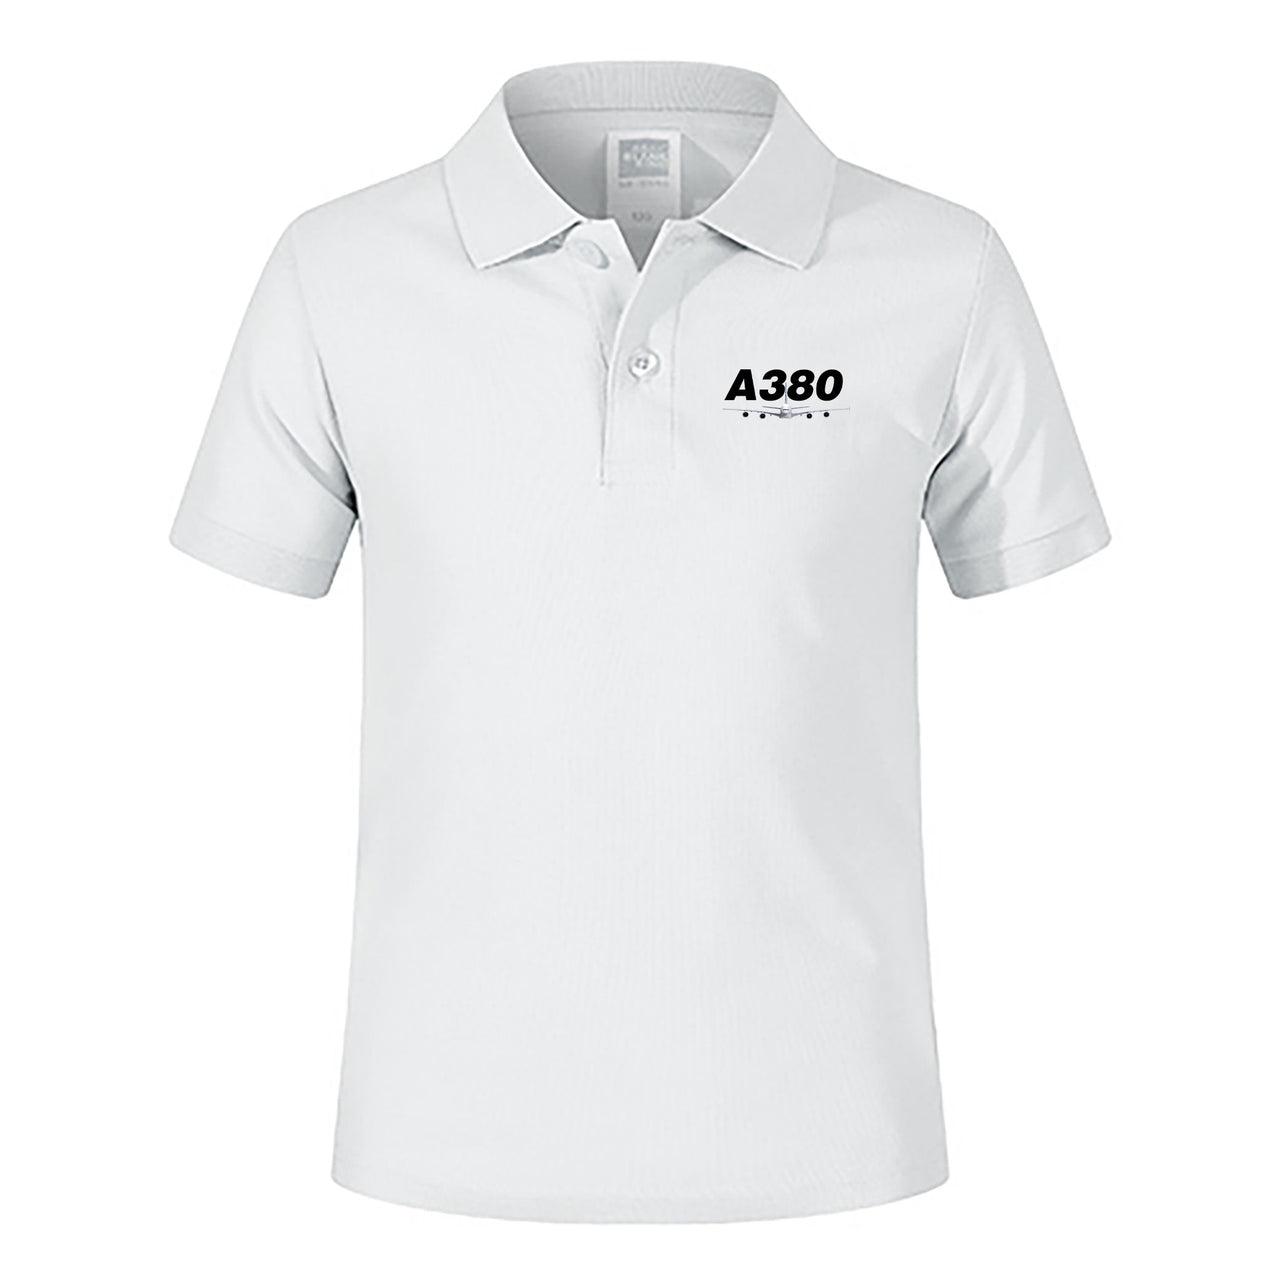 Super Airbus A380 Designed Children Polo T-Shirts